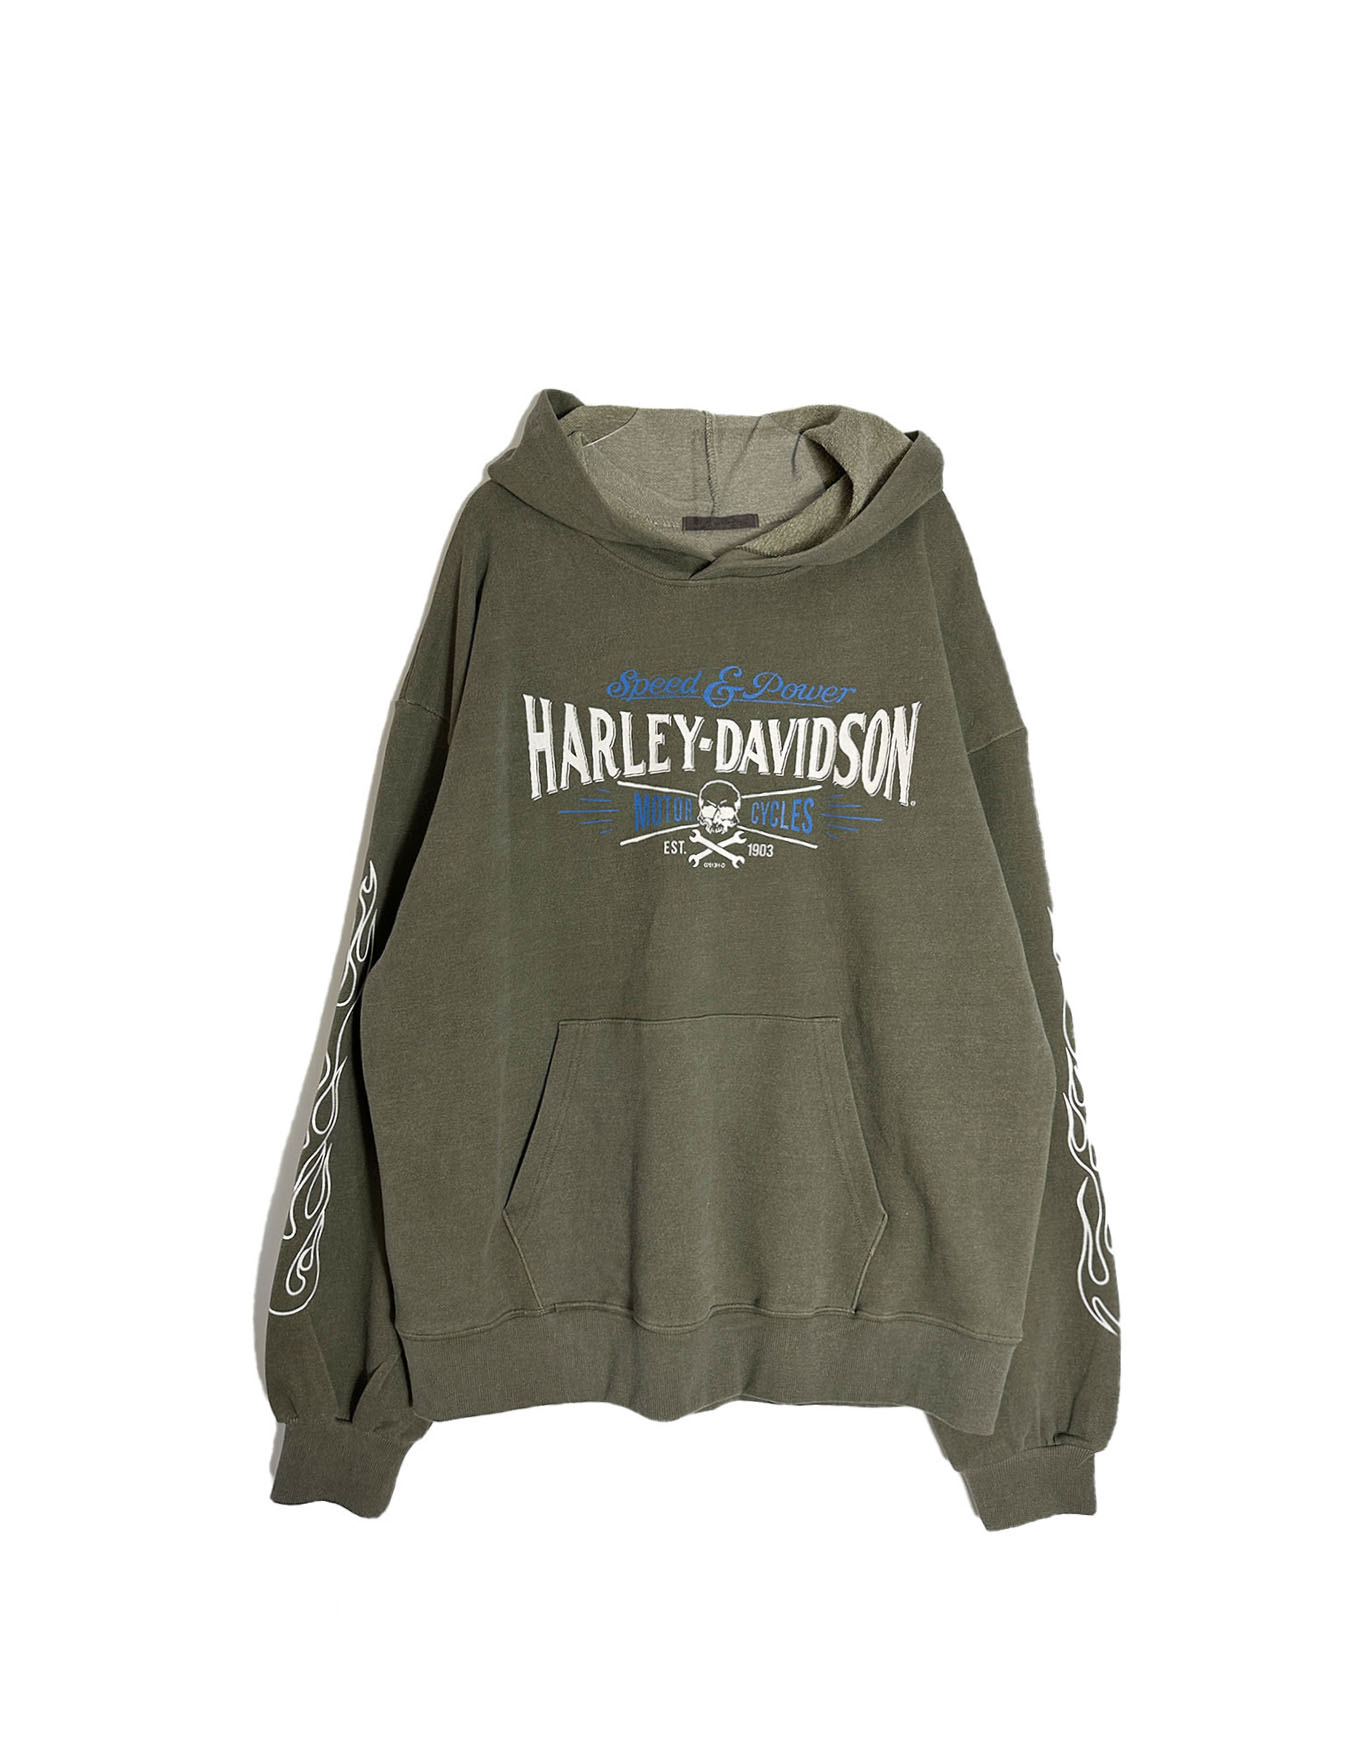 harley oversized hoody (3color)